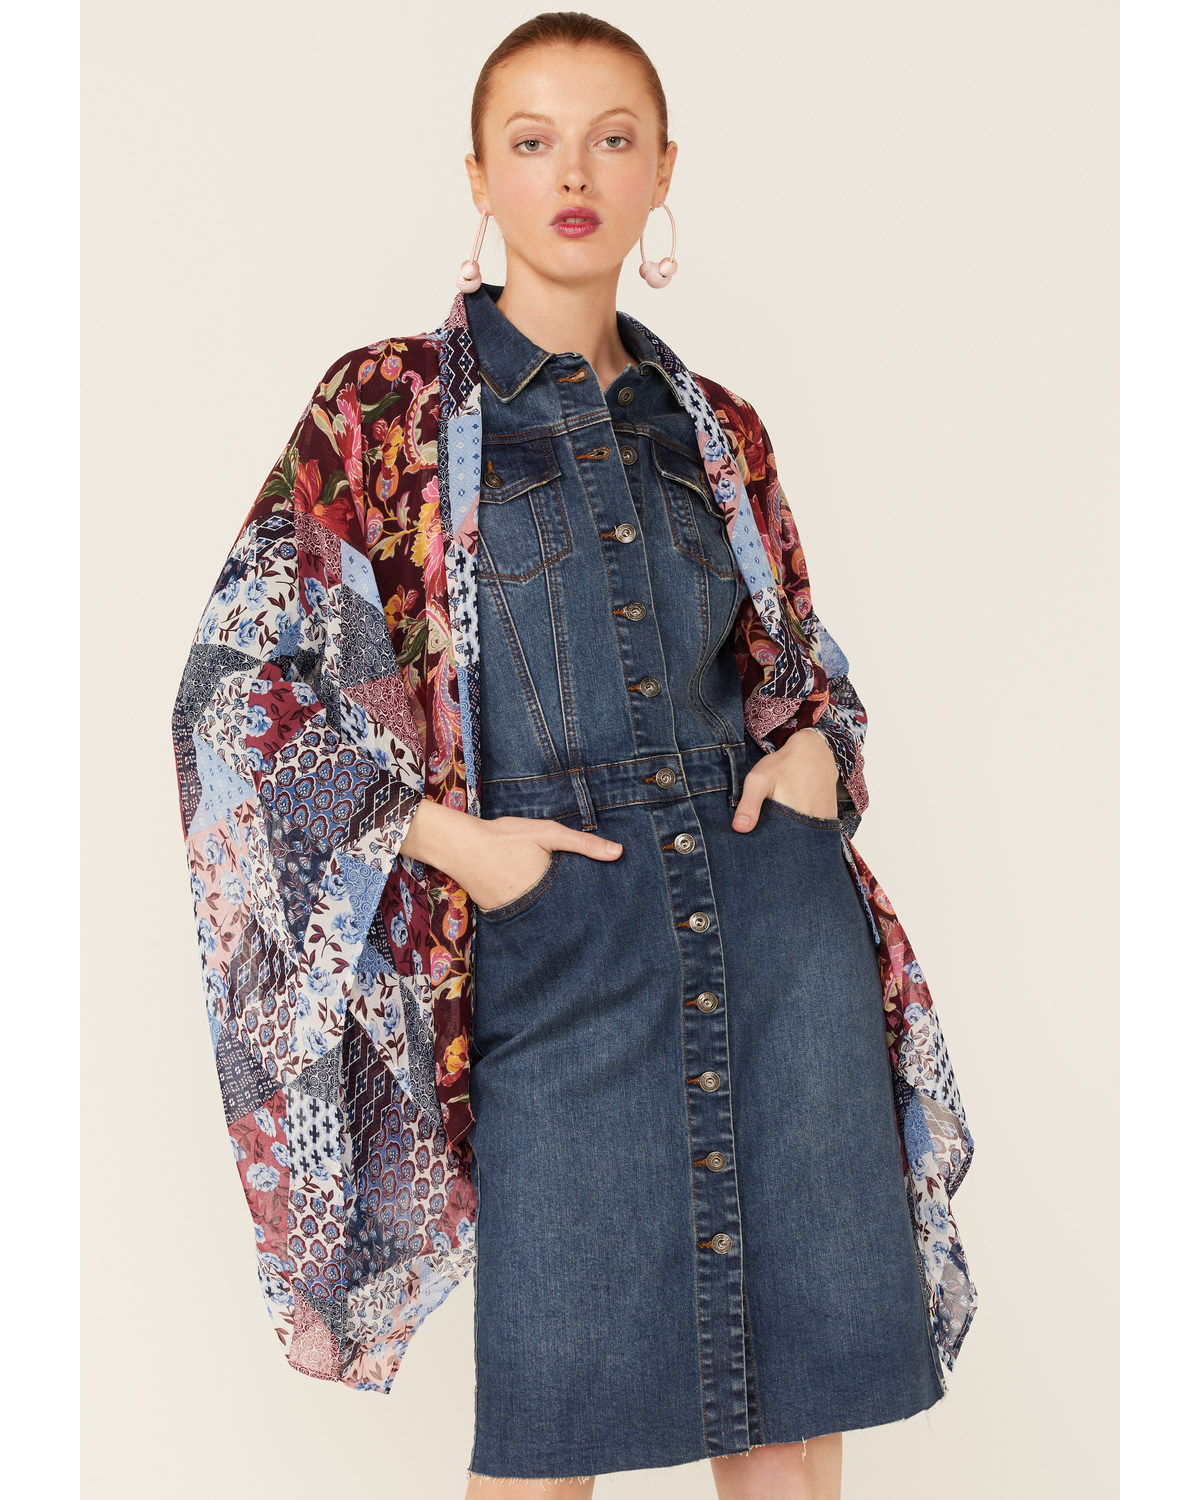 LaBiz Women's Navy & Burgundy Floral Short Kimono